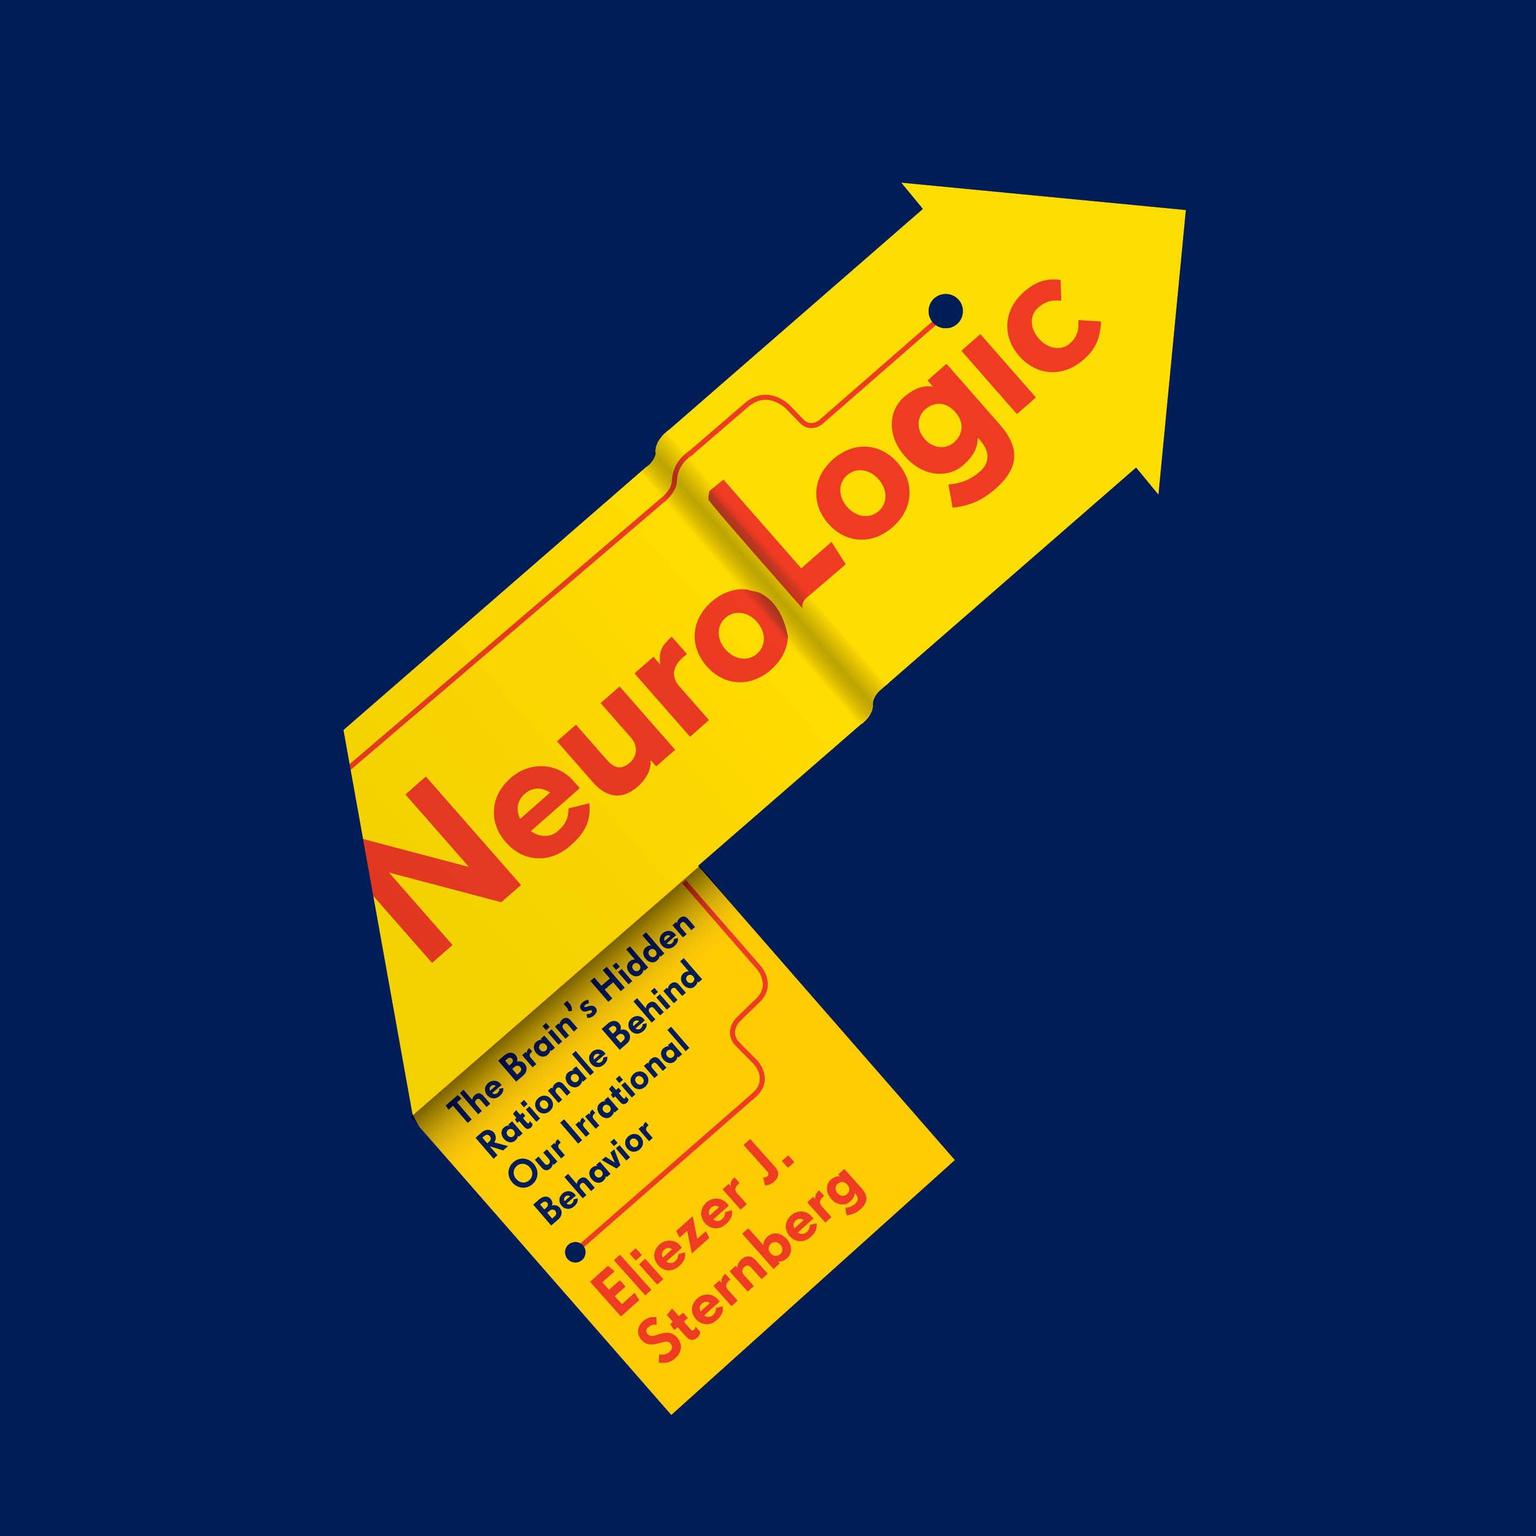 NeuroLogic: The Brains Hidden Rationale Behind Our Irrational Behavior Audiobook, by Eliezer Sternberg